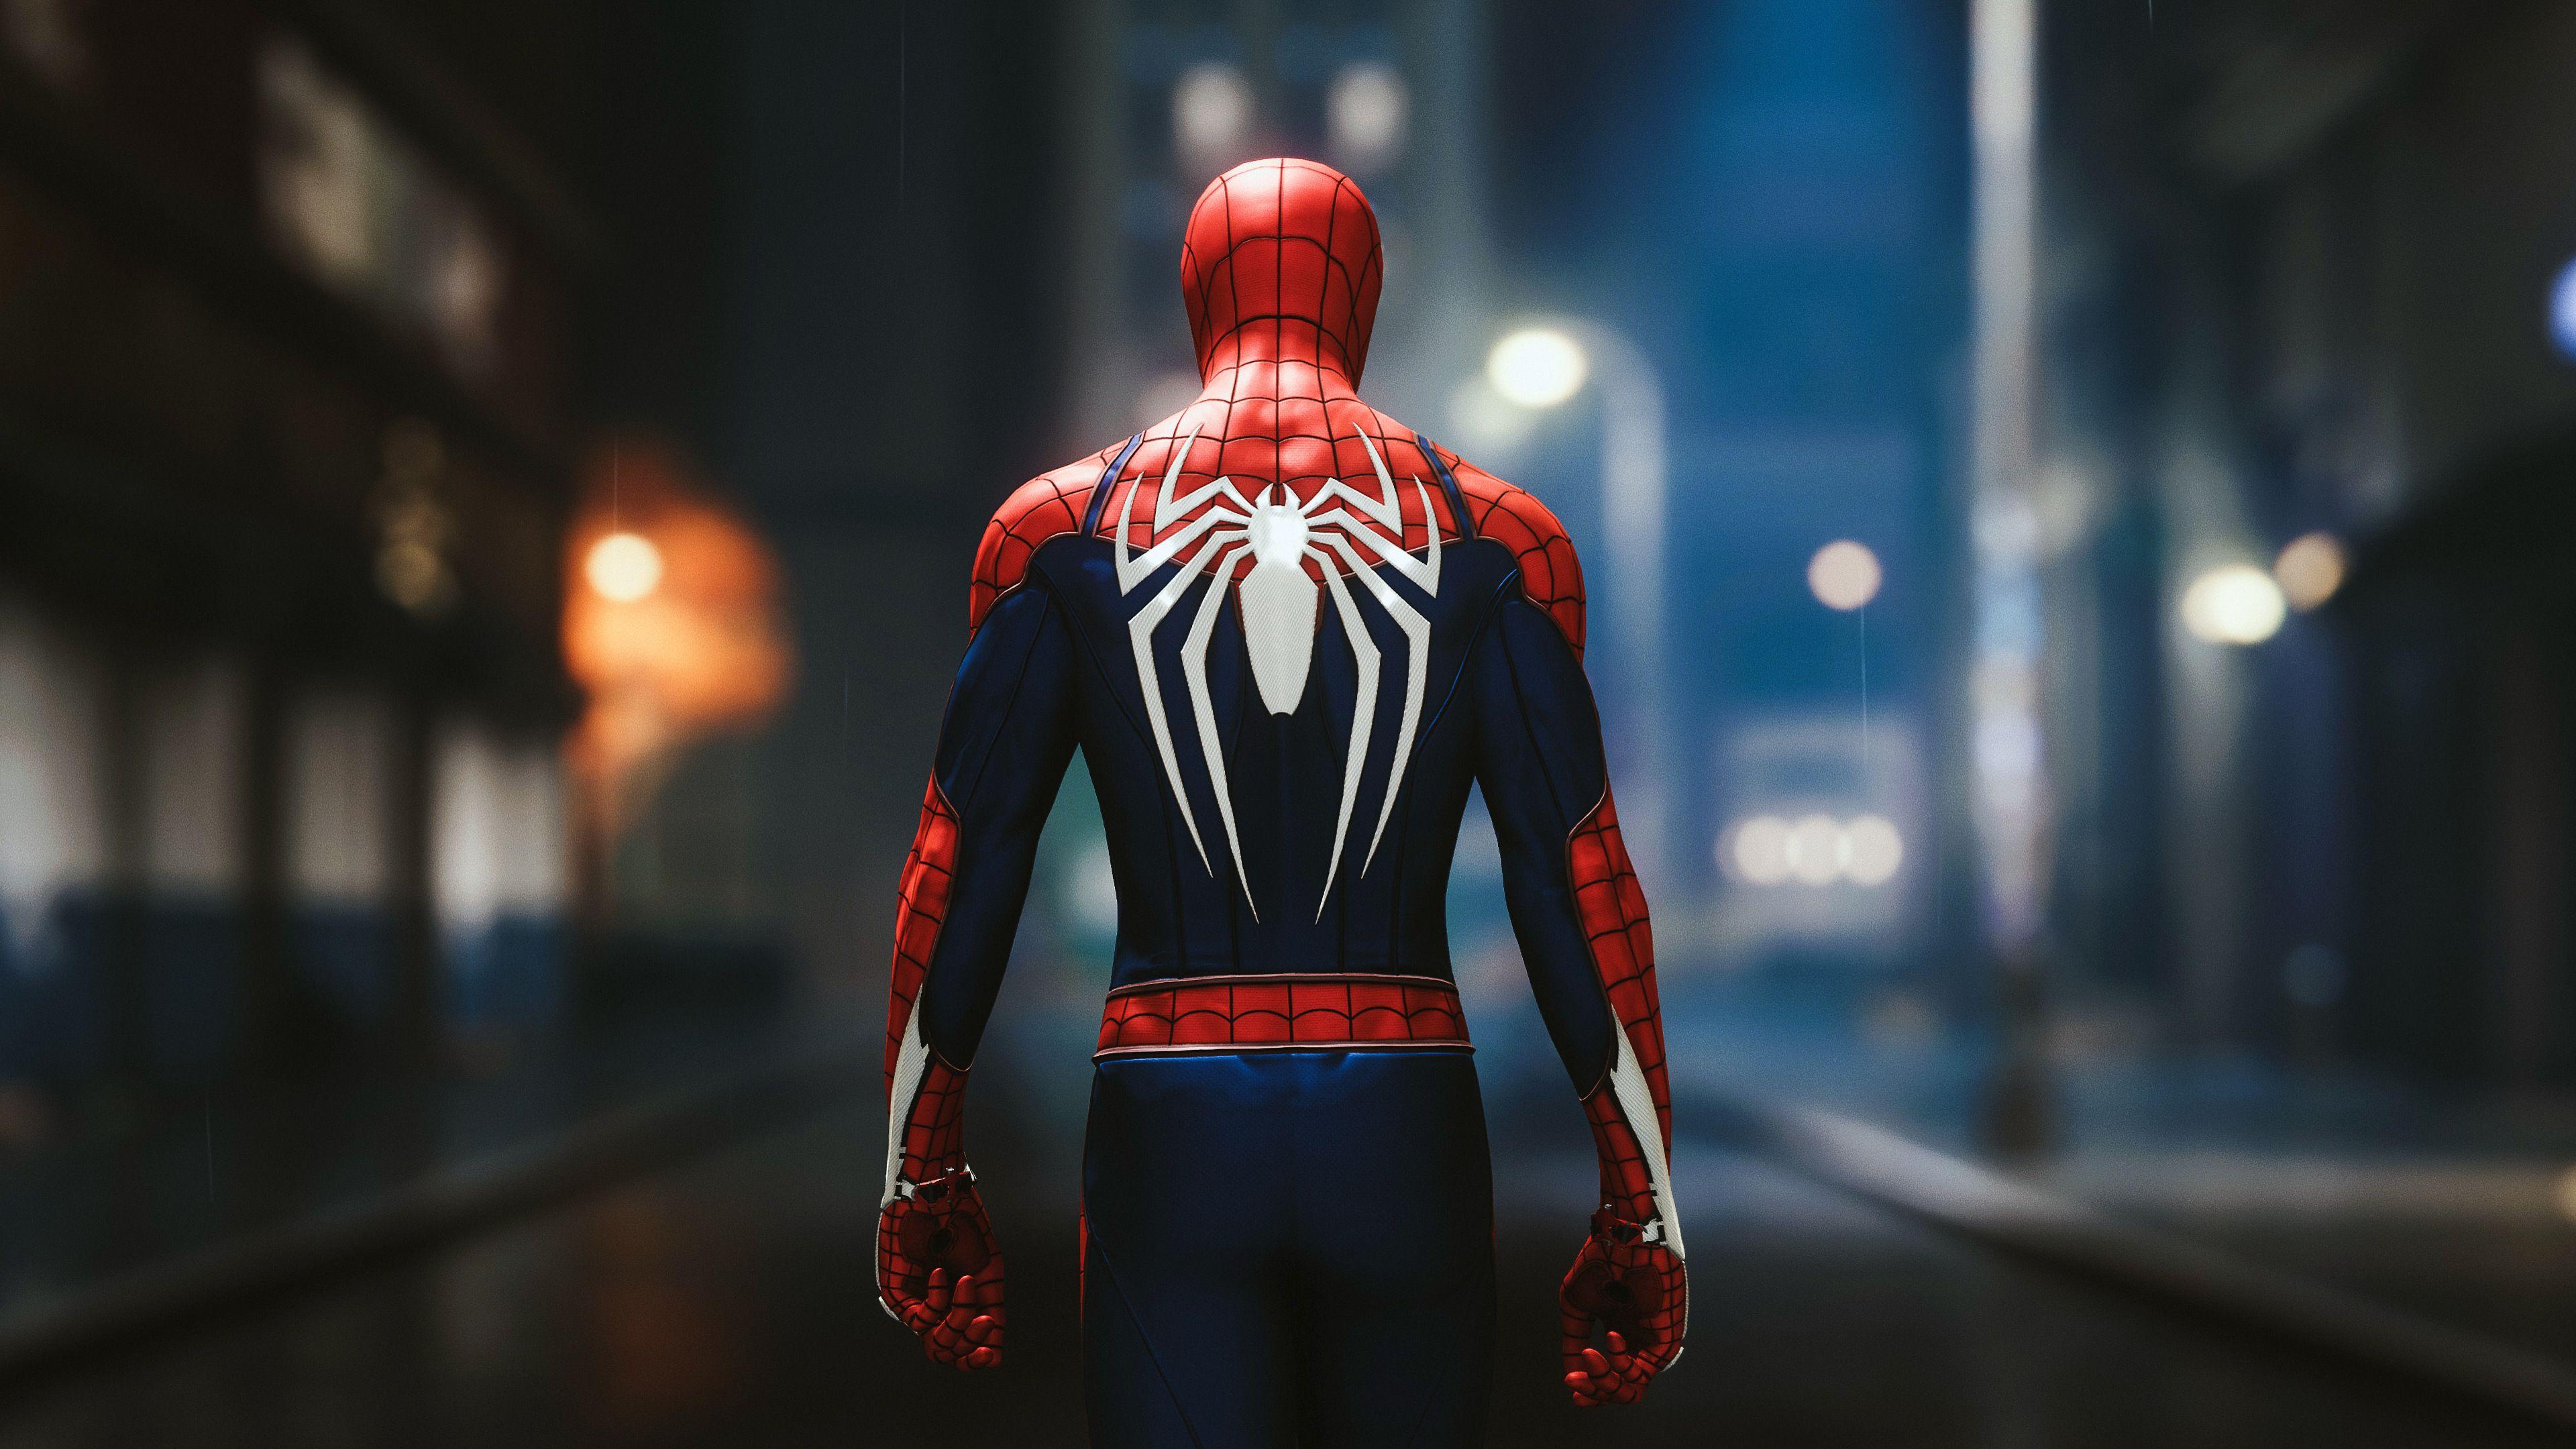 3840x2160 Spider Man (PS4) Hình nền 4k Ultra HD Advanced Suit